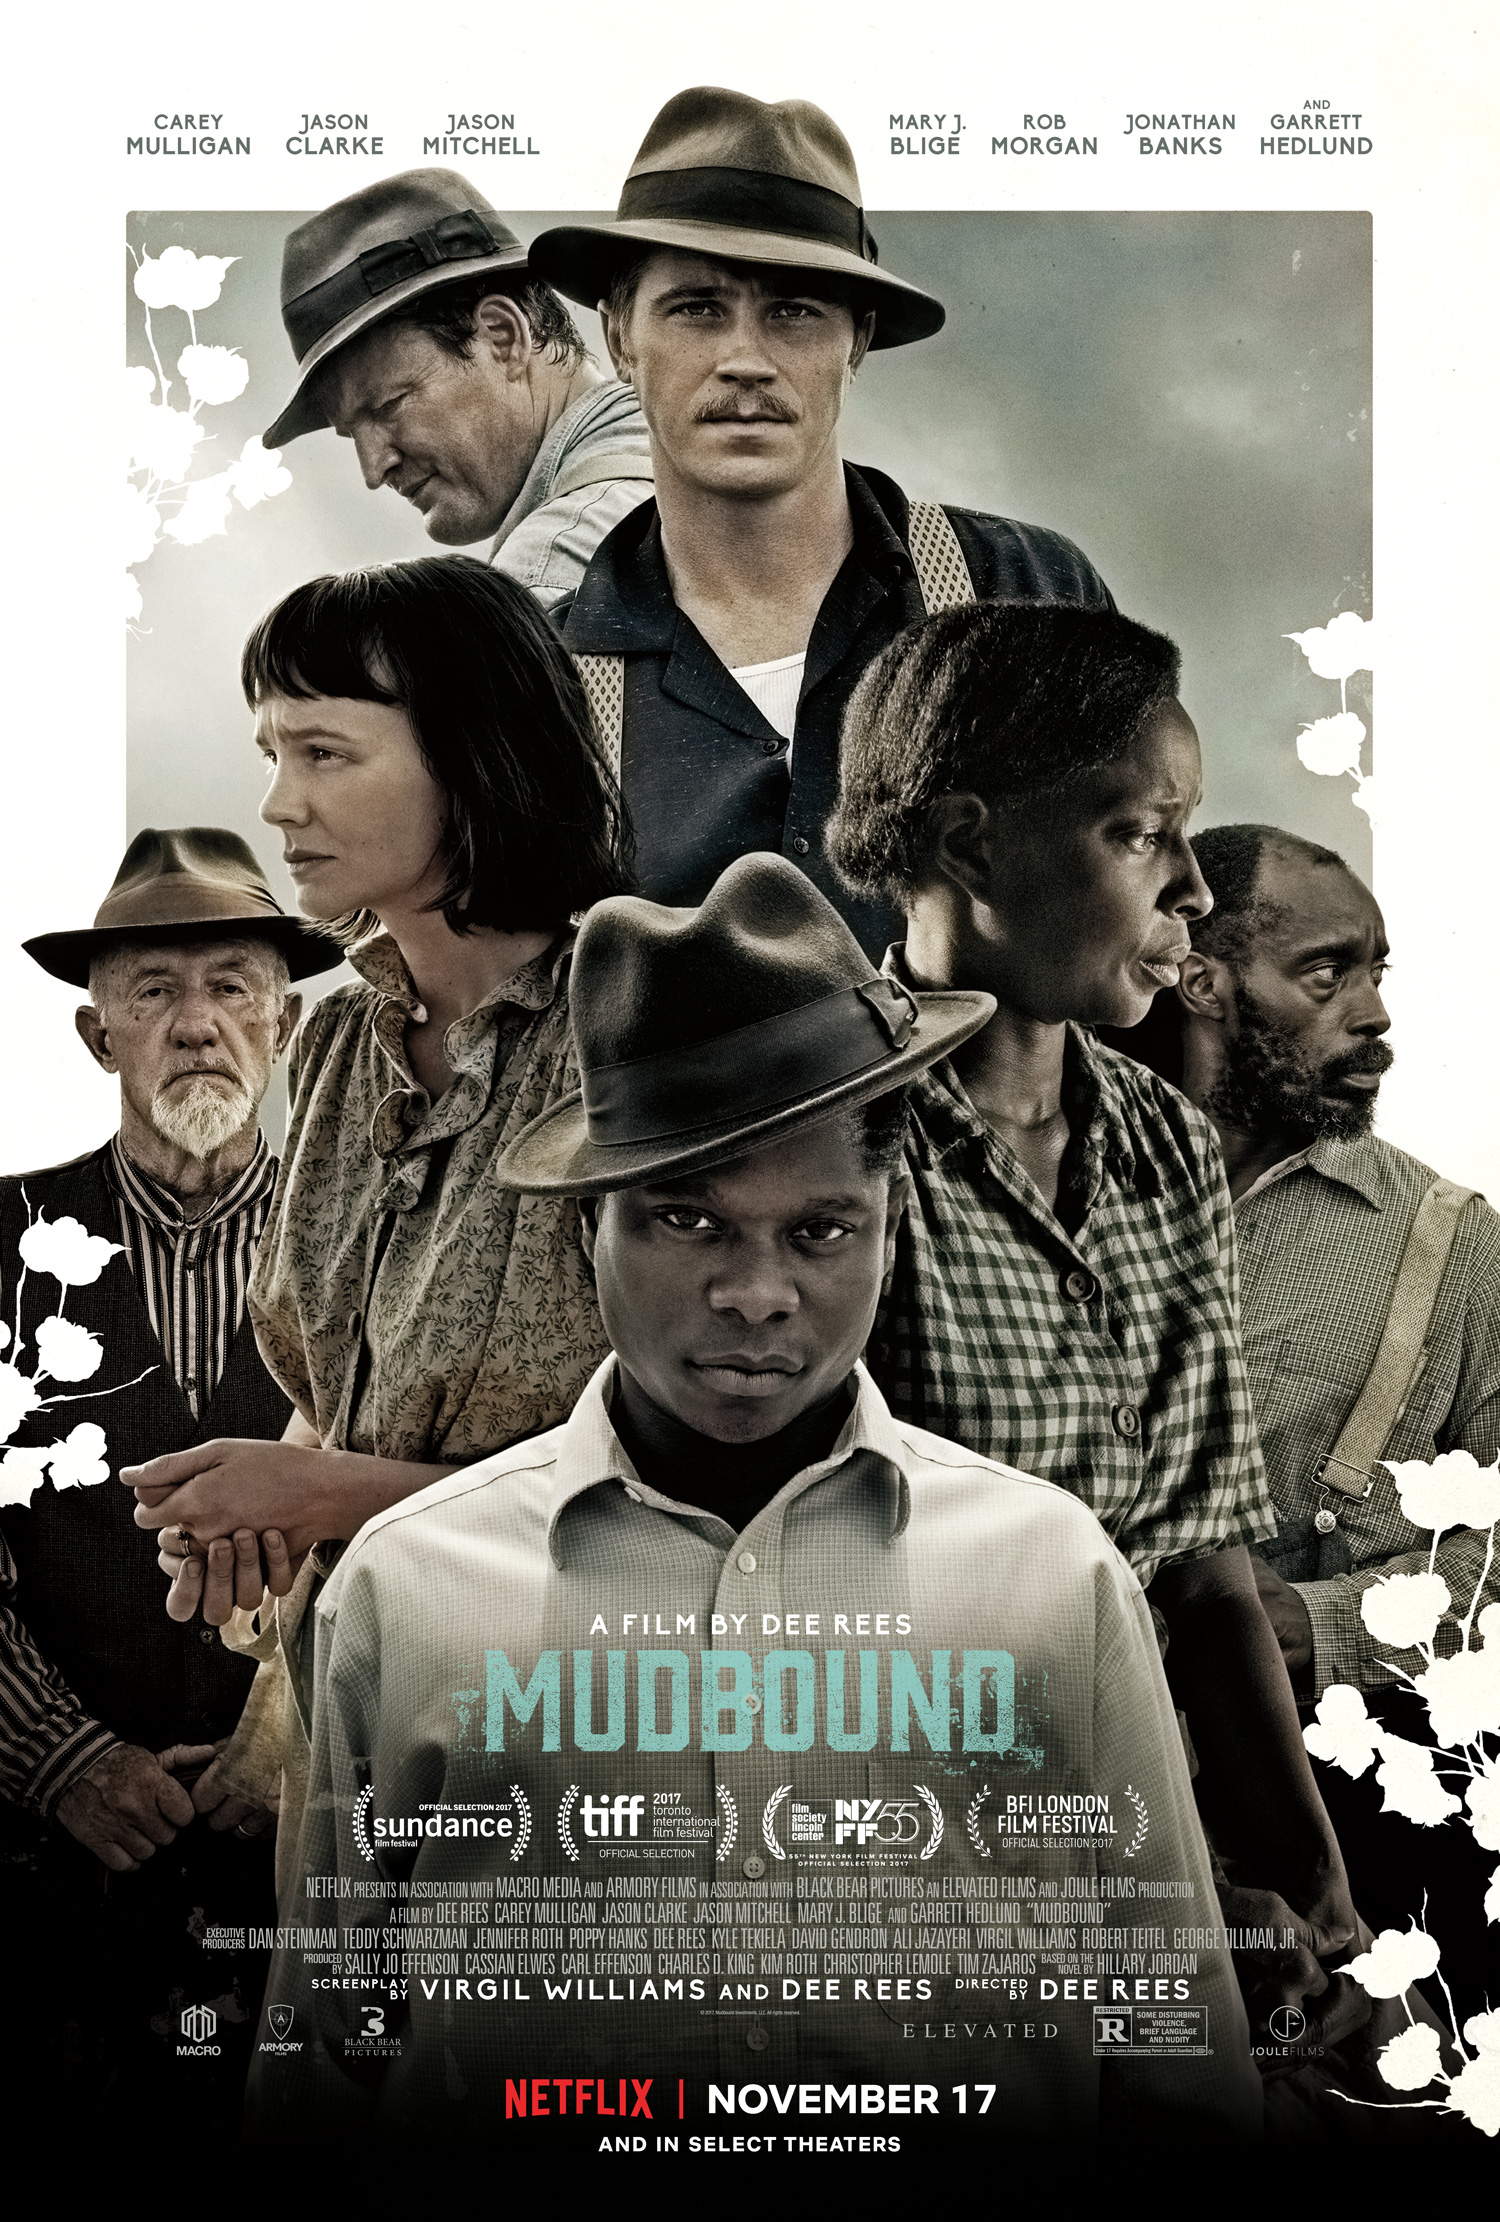 Nonton film Mudbound layarkaca21 indoxx1 ganool online streaming terbaru